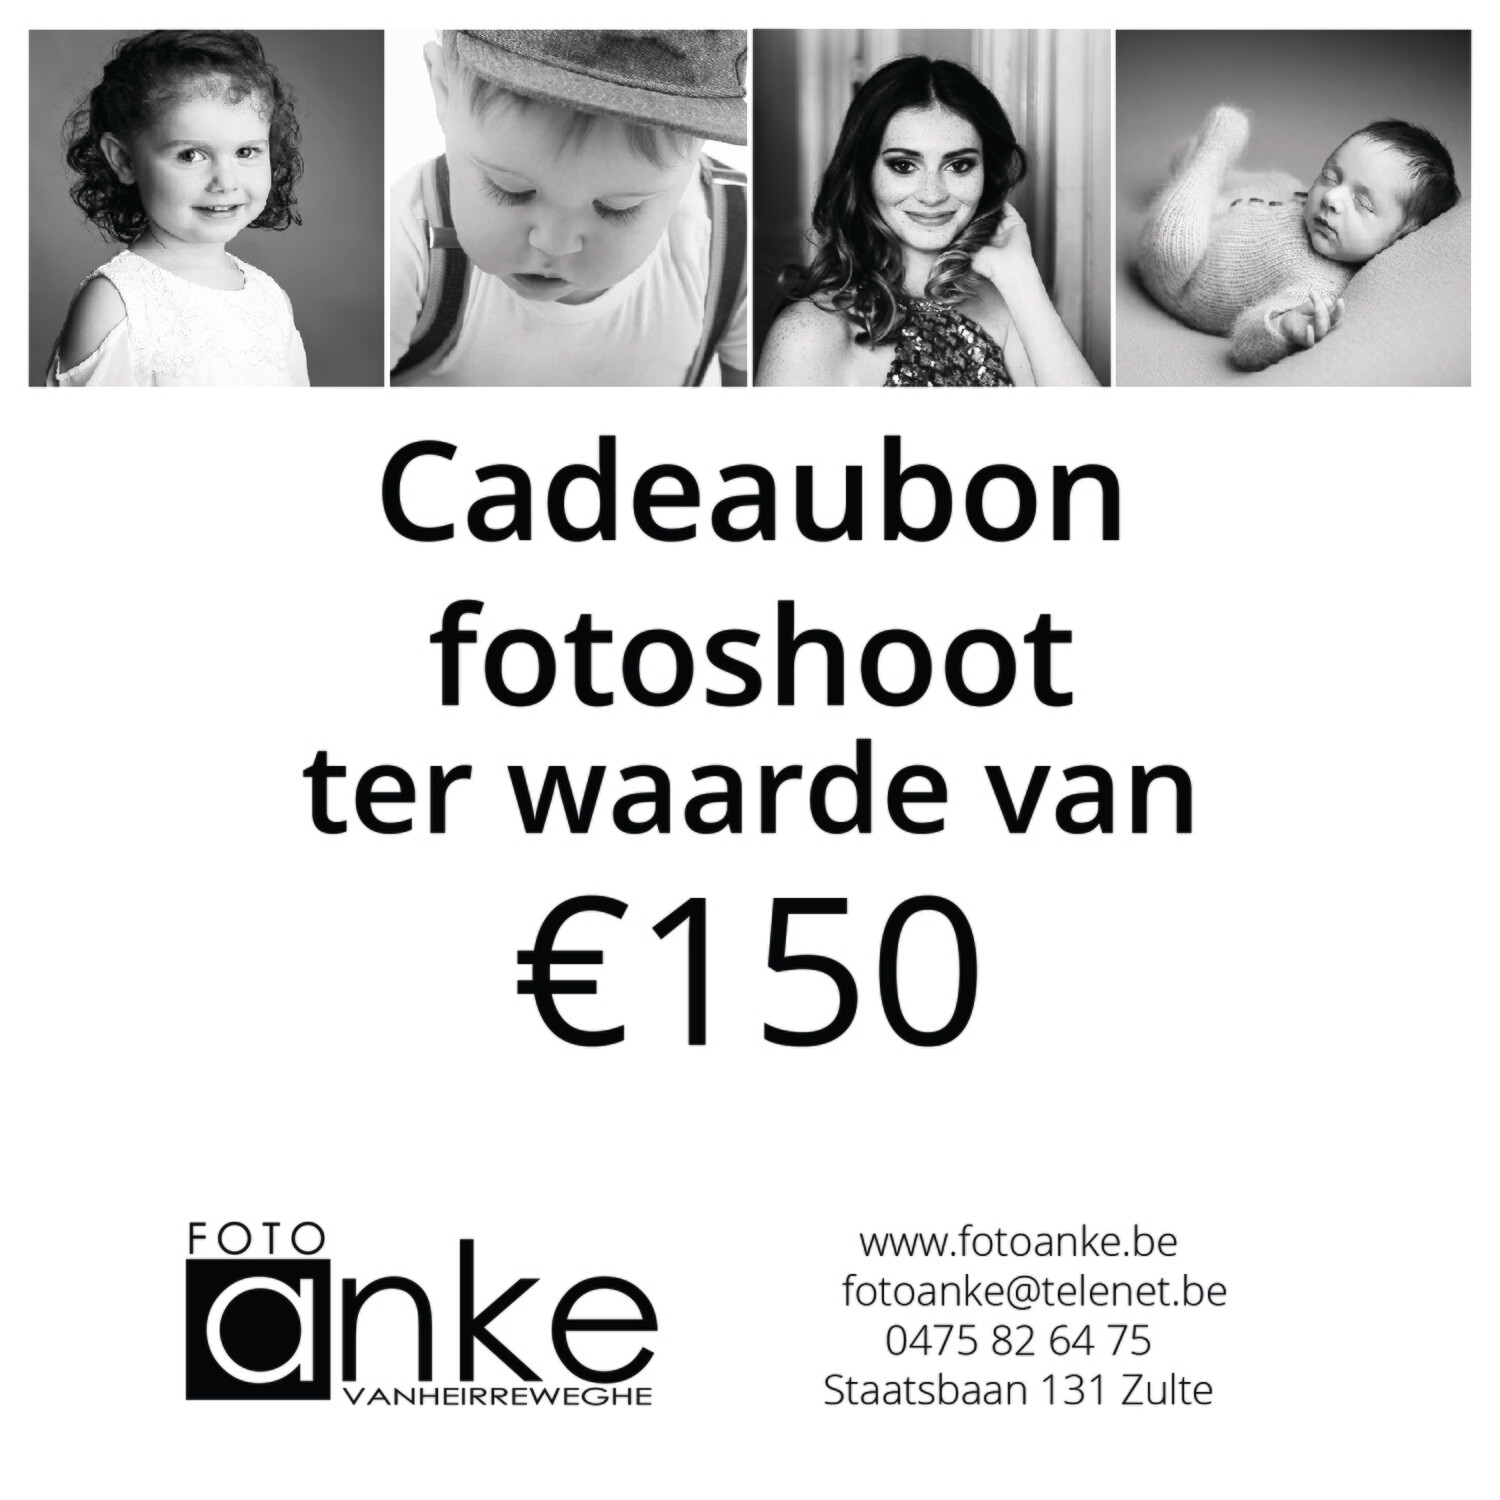 Cadeaubon fotoshoot €150